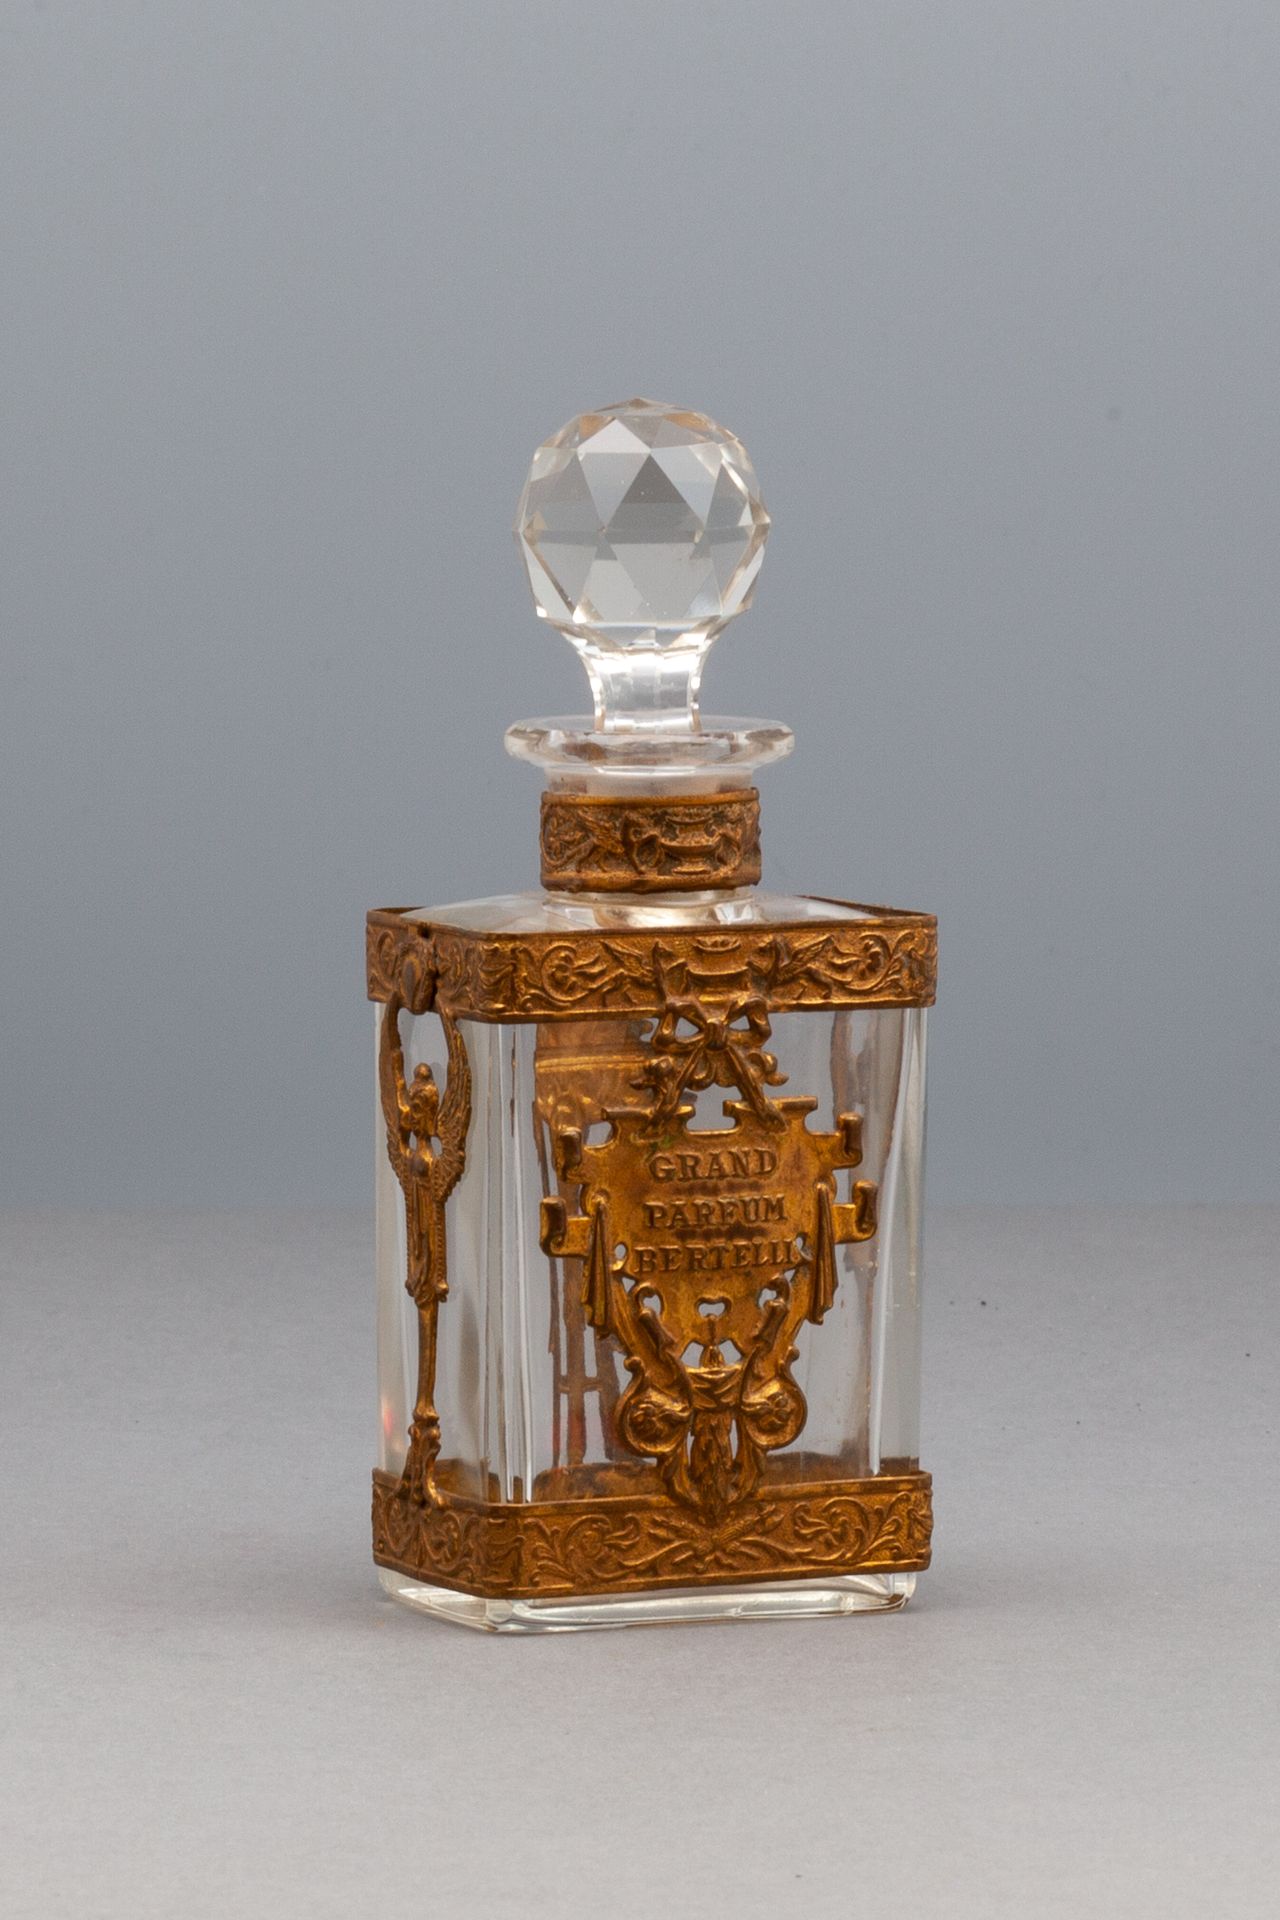 BERTELLI "GRAND PARFUM" BACCARAT水晶瓶，周围是金色的图案，两边是两个有翅膀的女人。琢磨的塞子。高12,8厘米